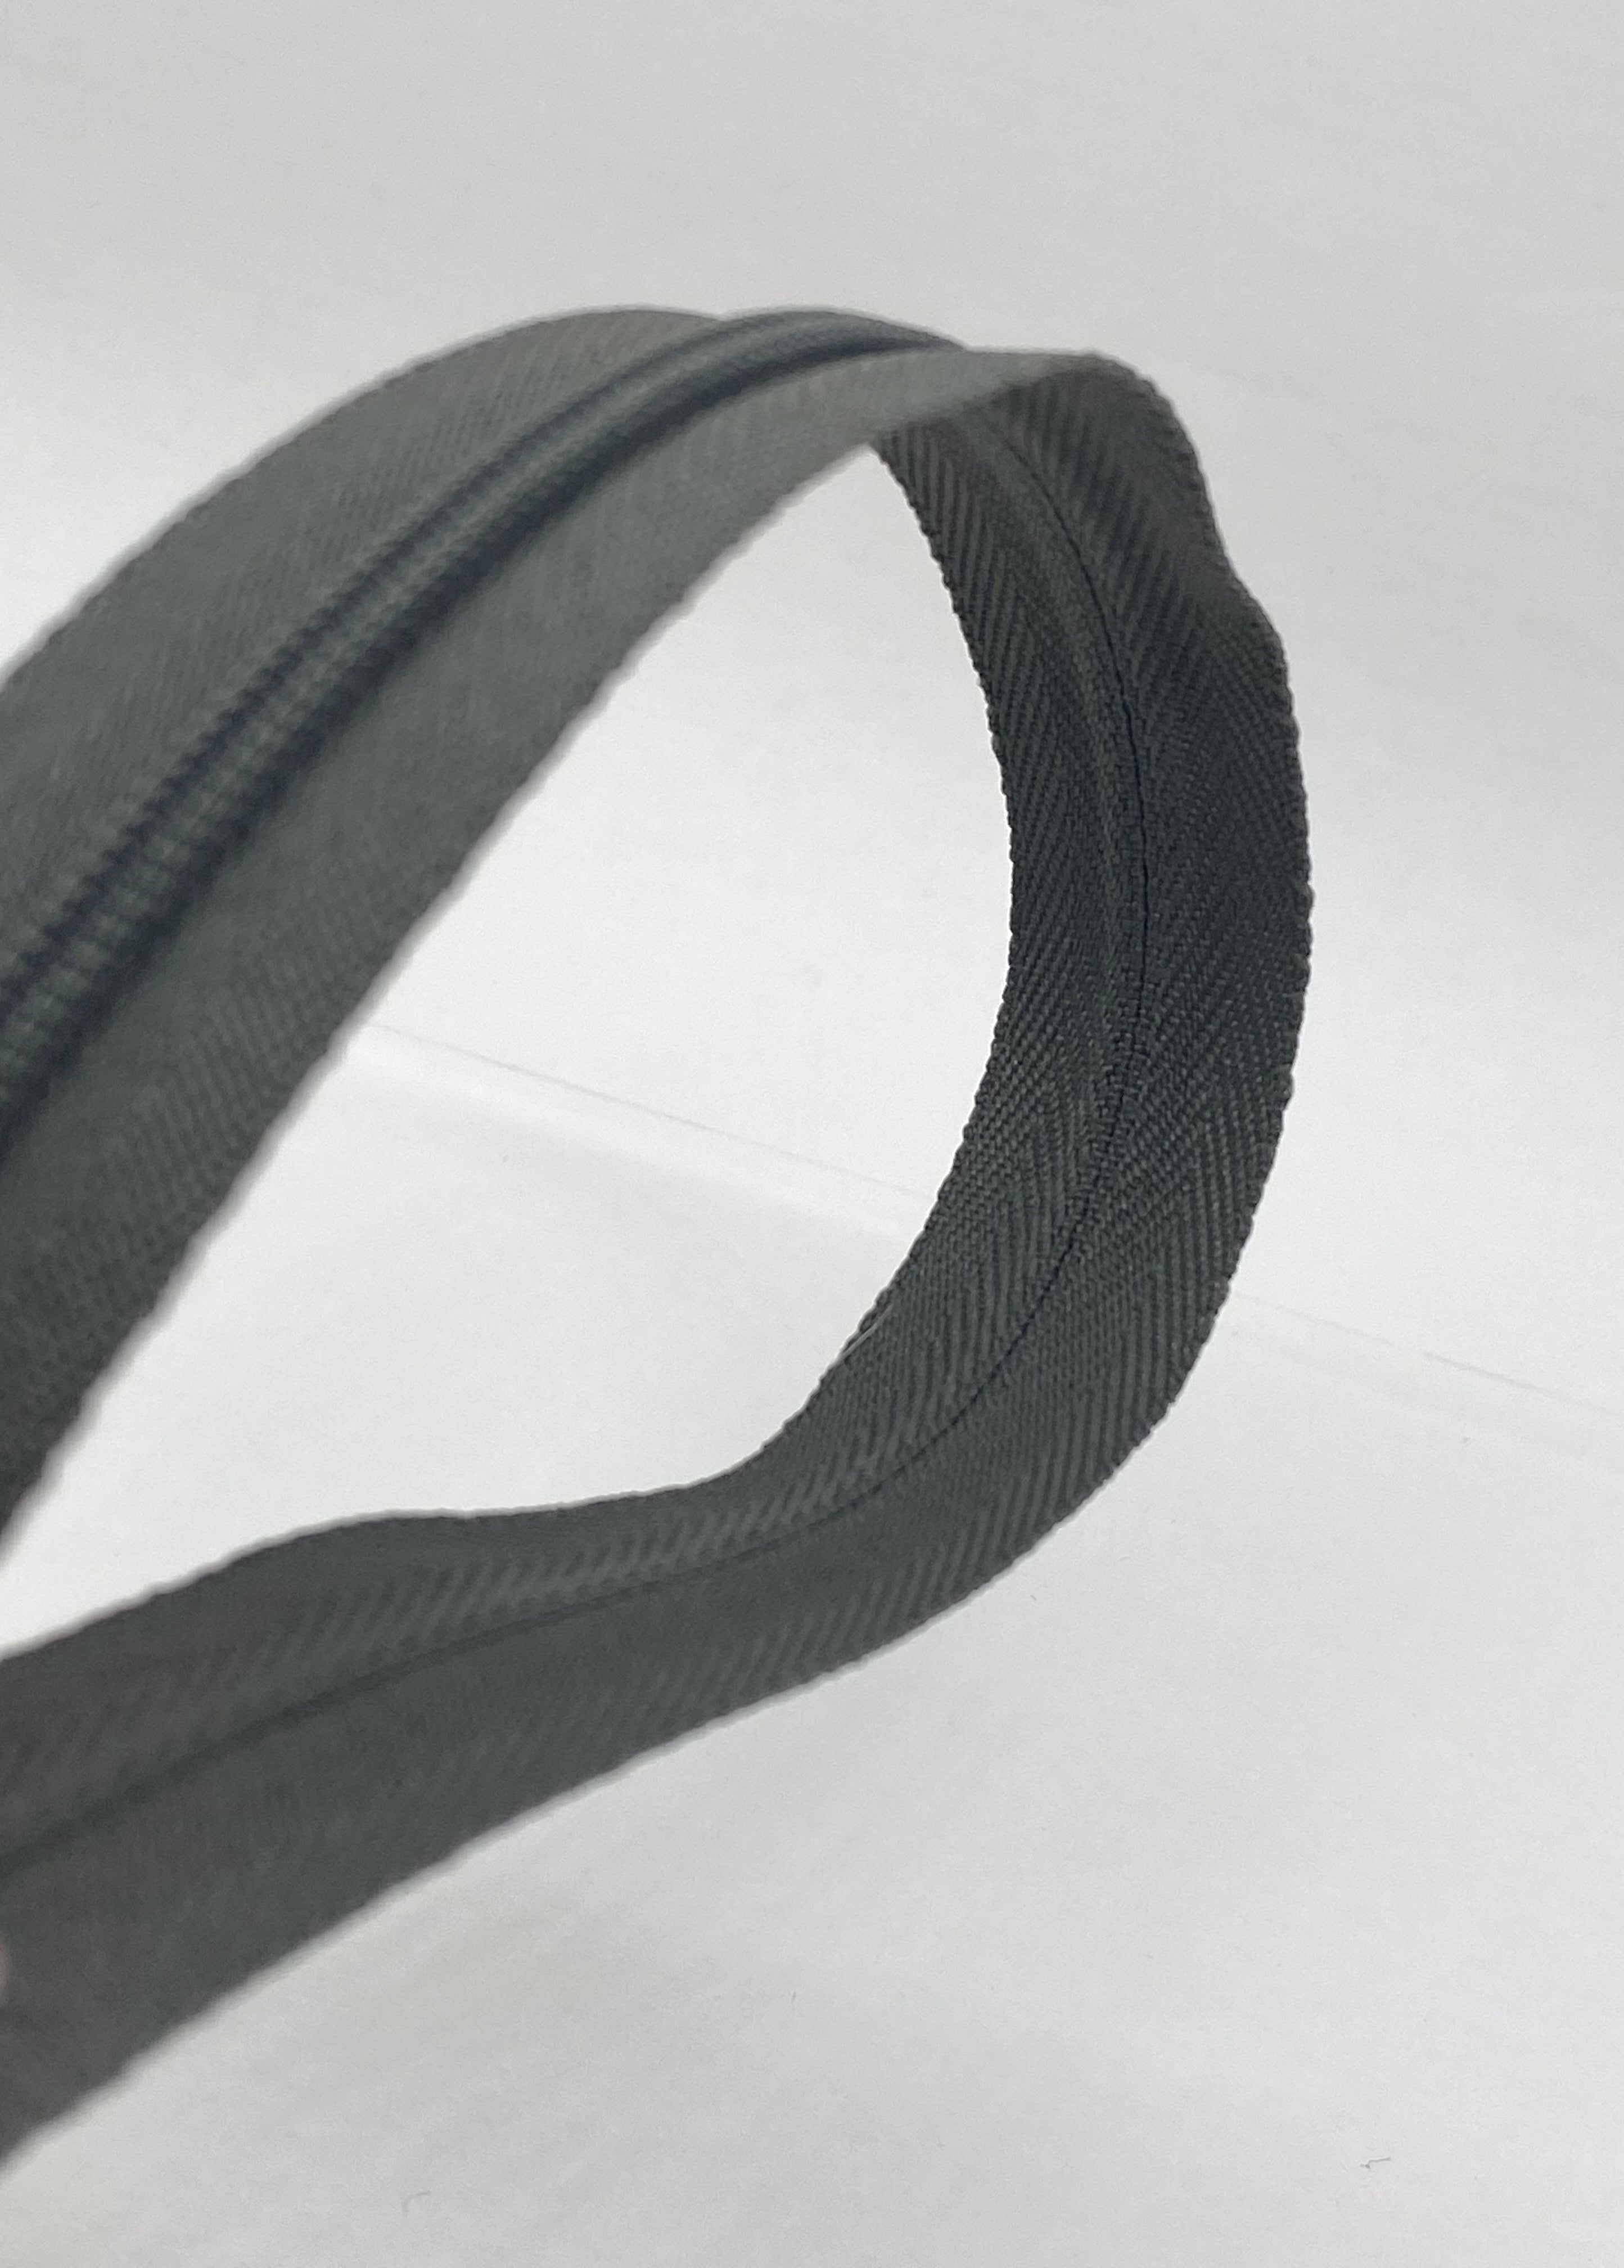 3 Nickel Pants/Bag Light Weight YKK Zippers - Color: Light Grey